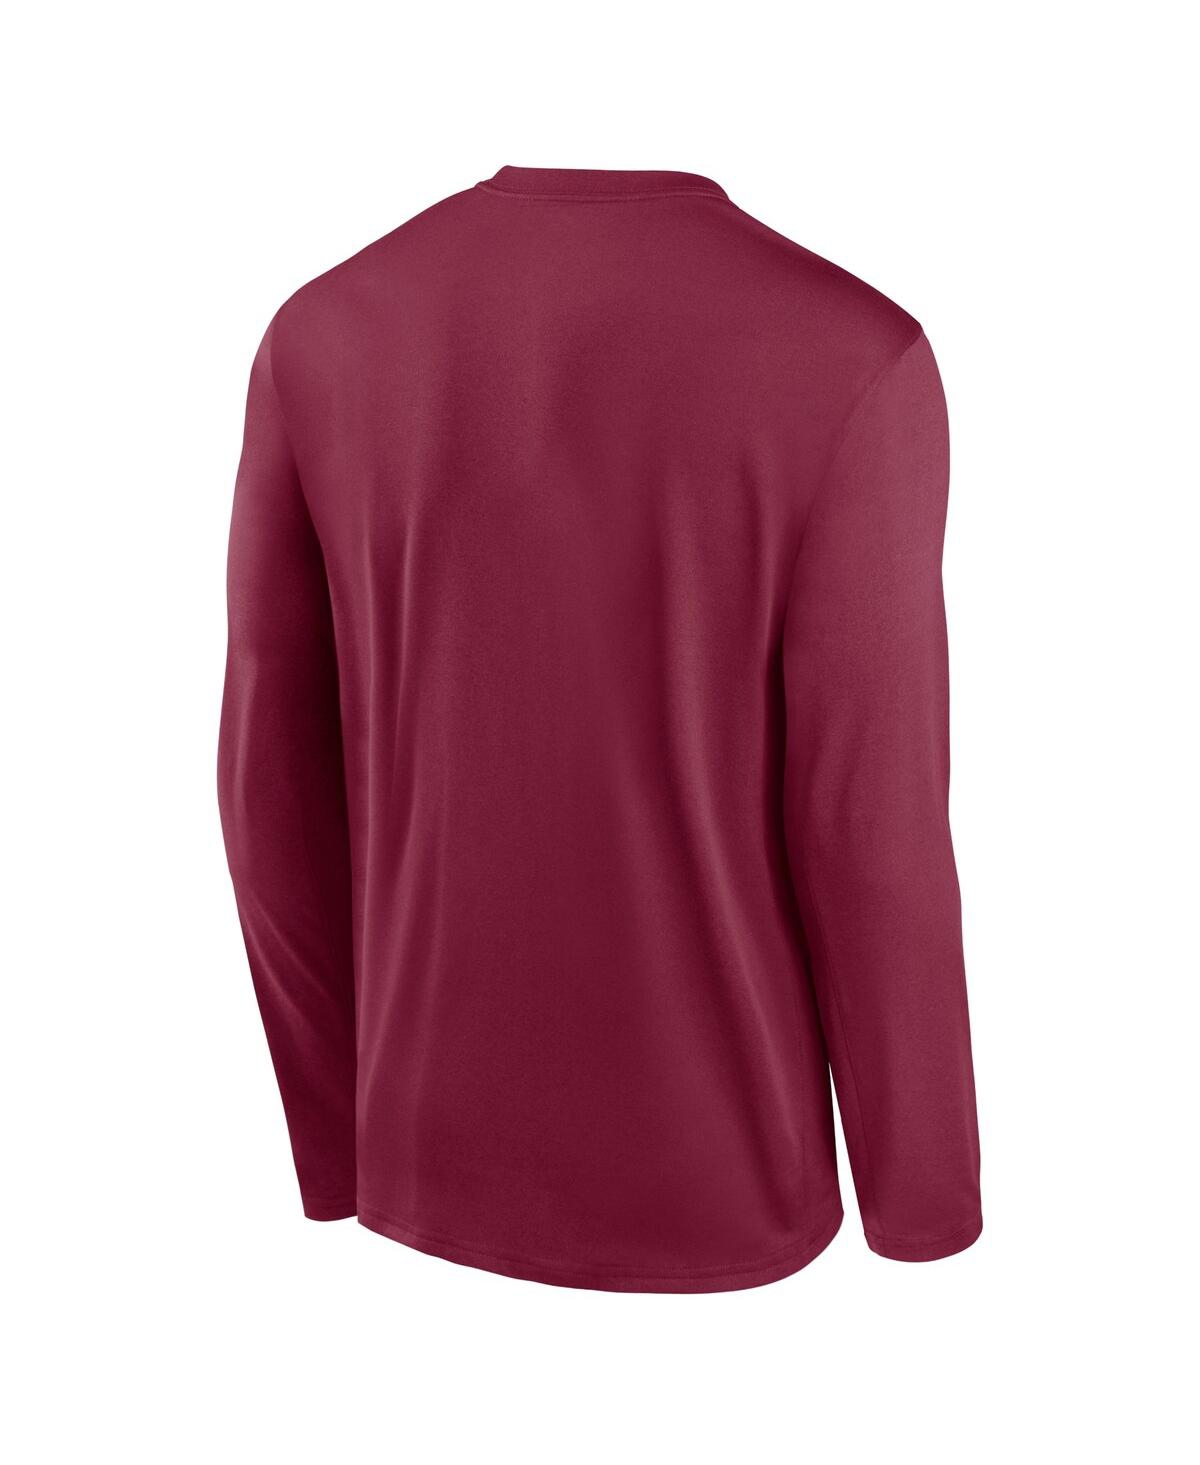 Shop Nike Men's Burgundy Philadelphia Phillies Authentic Collection Practice Performance Long Sleeve T-shirt